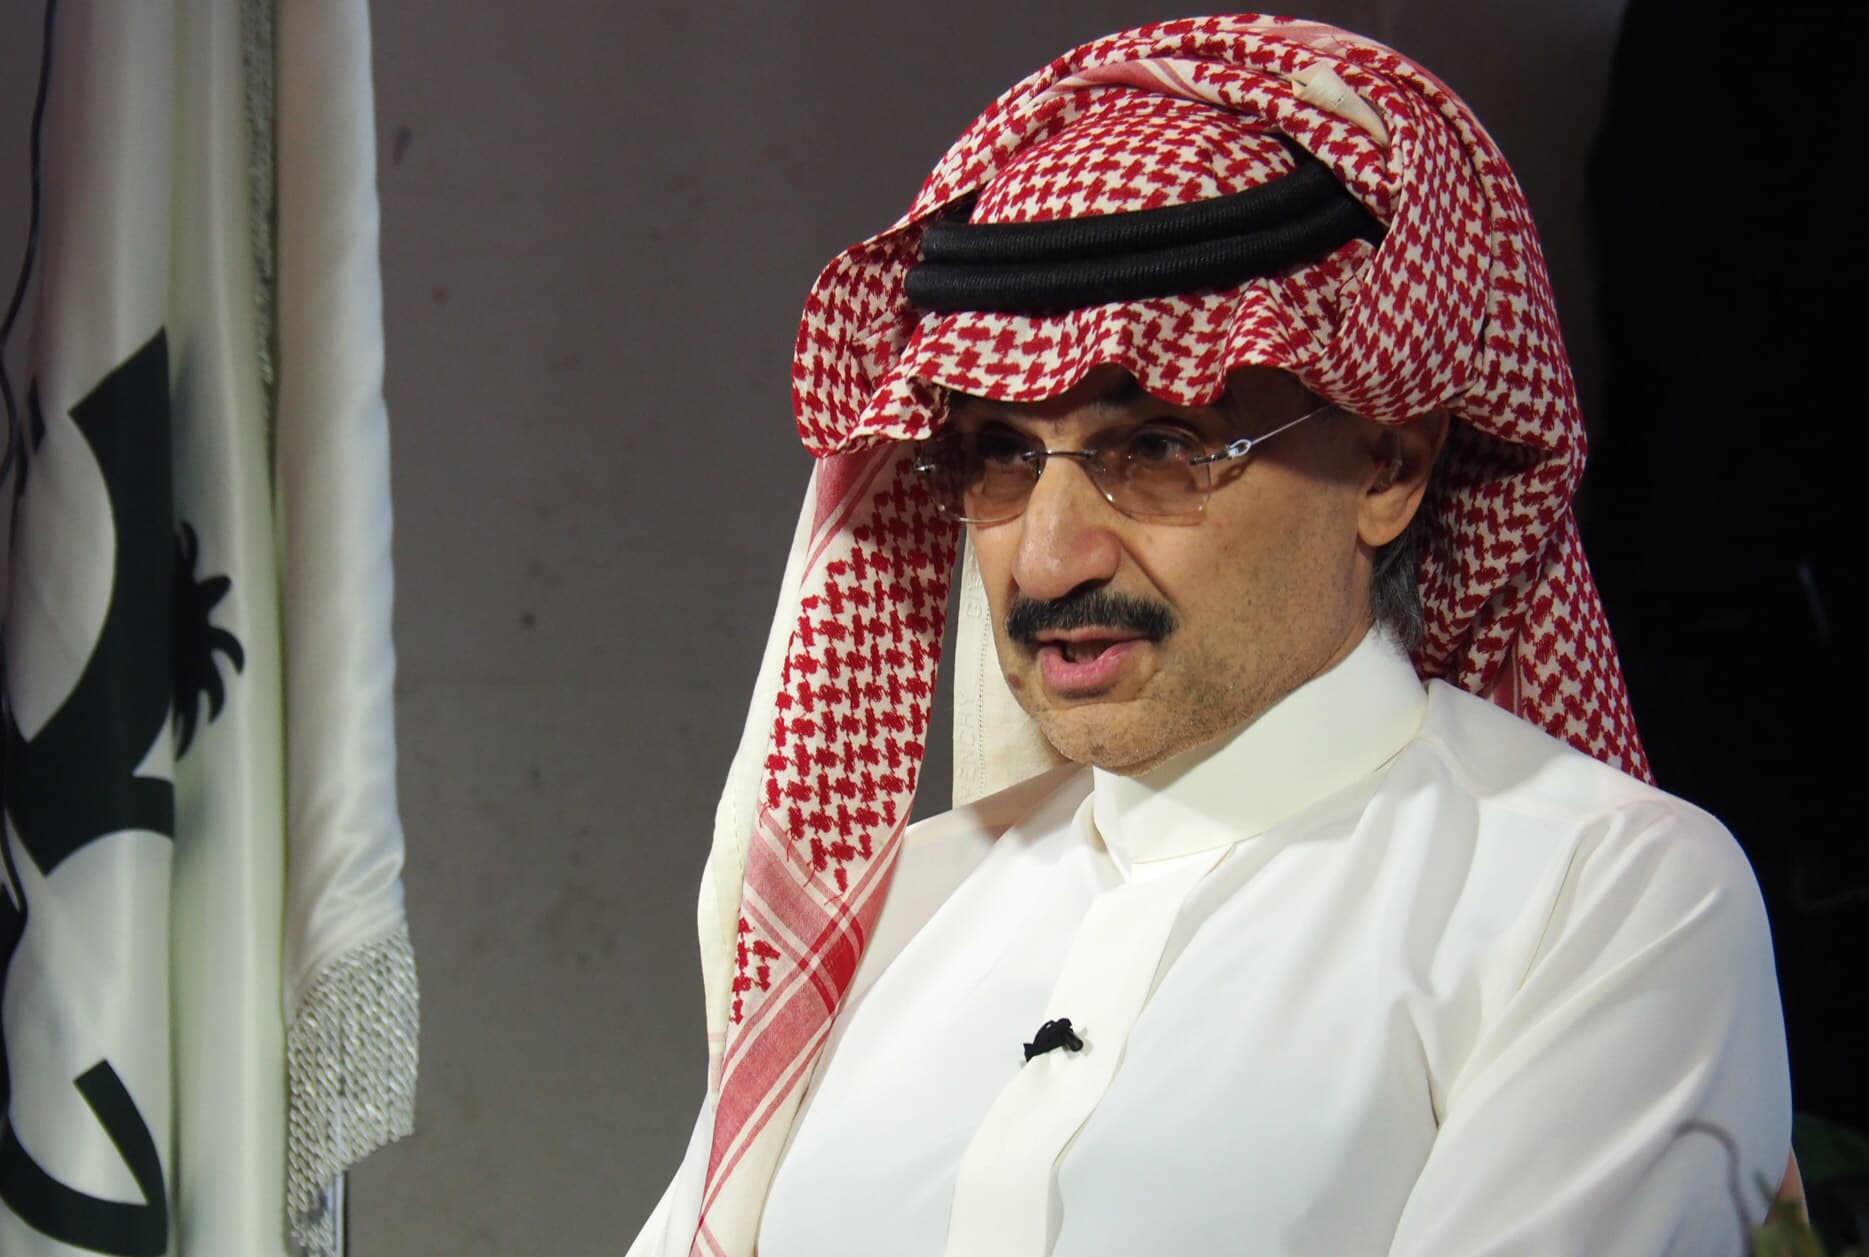 Al Waleed bin Talal Al Saud